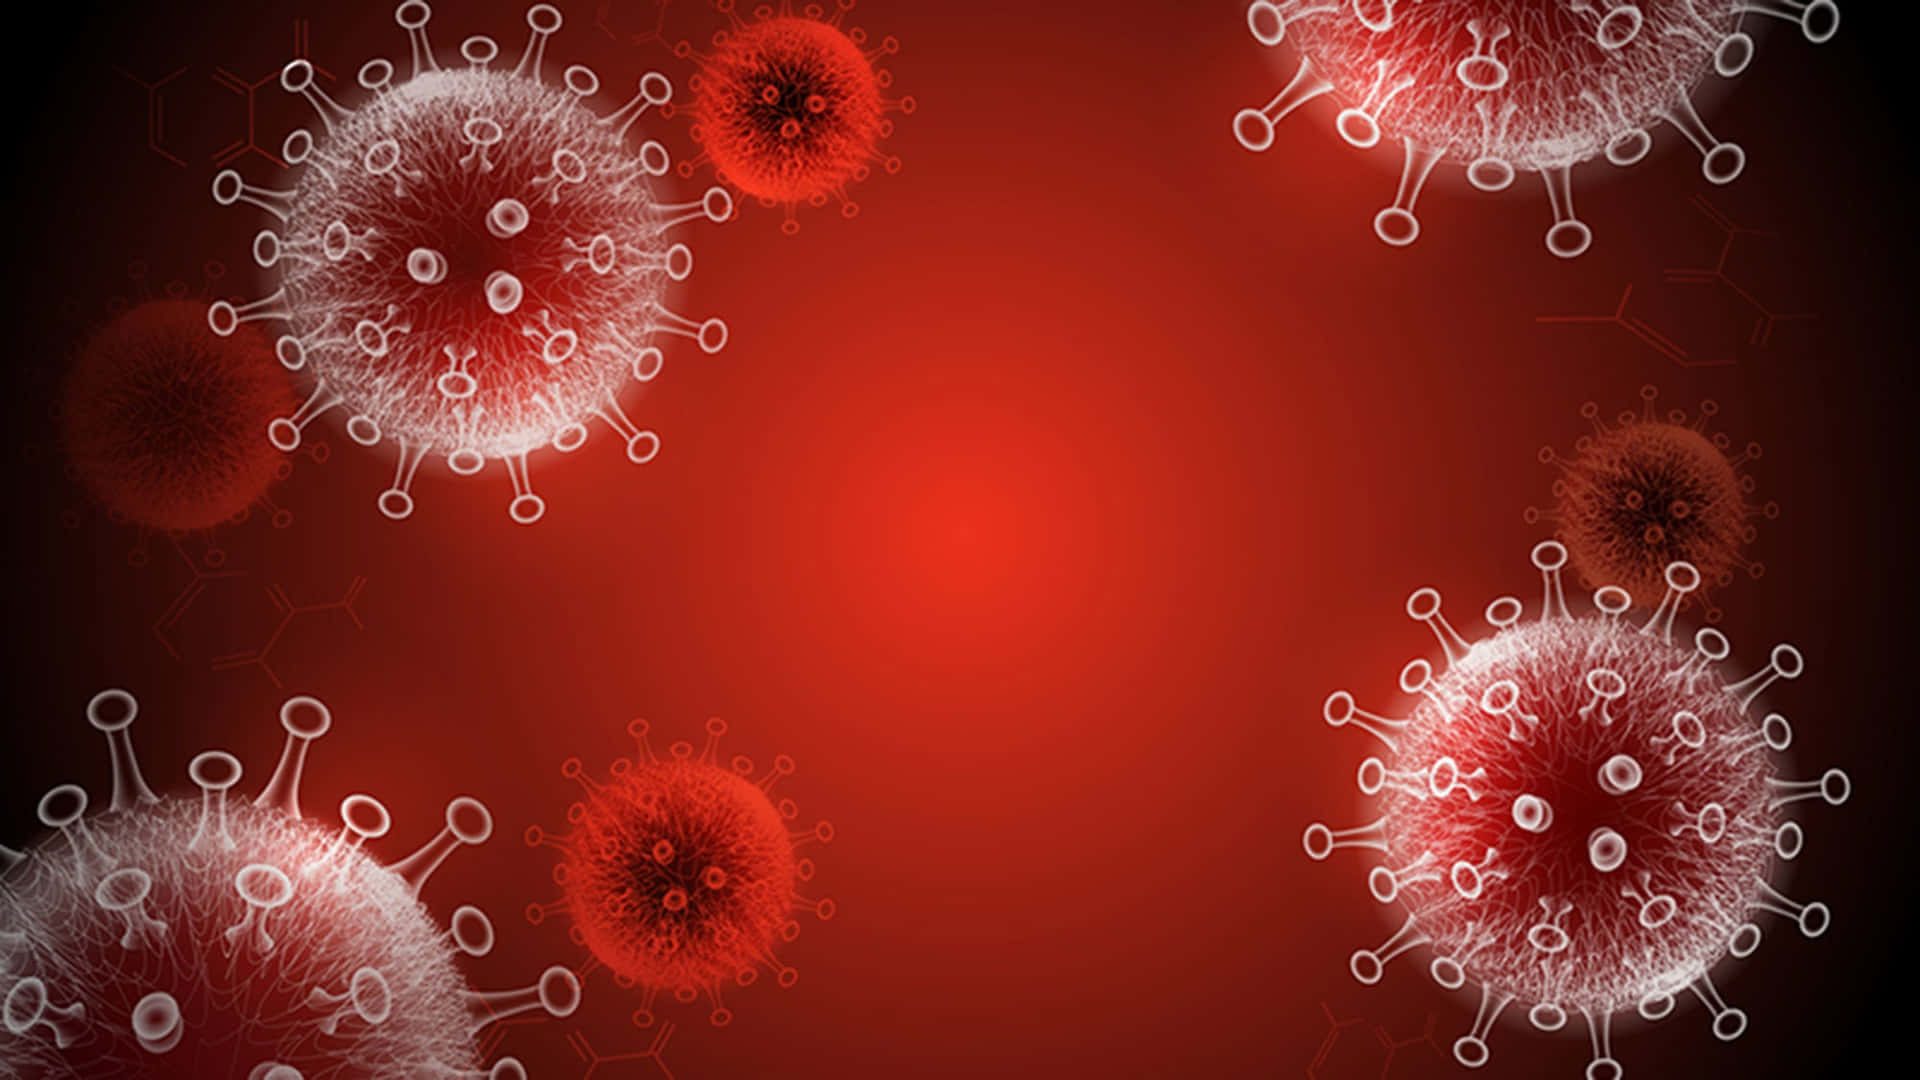 Coronavirussu Sfondo Rosso